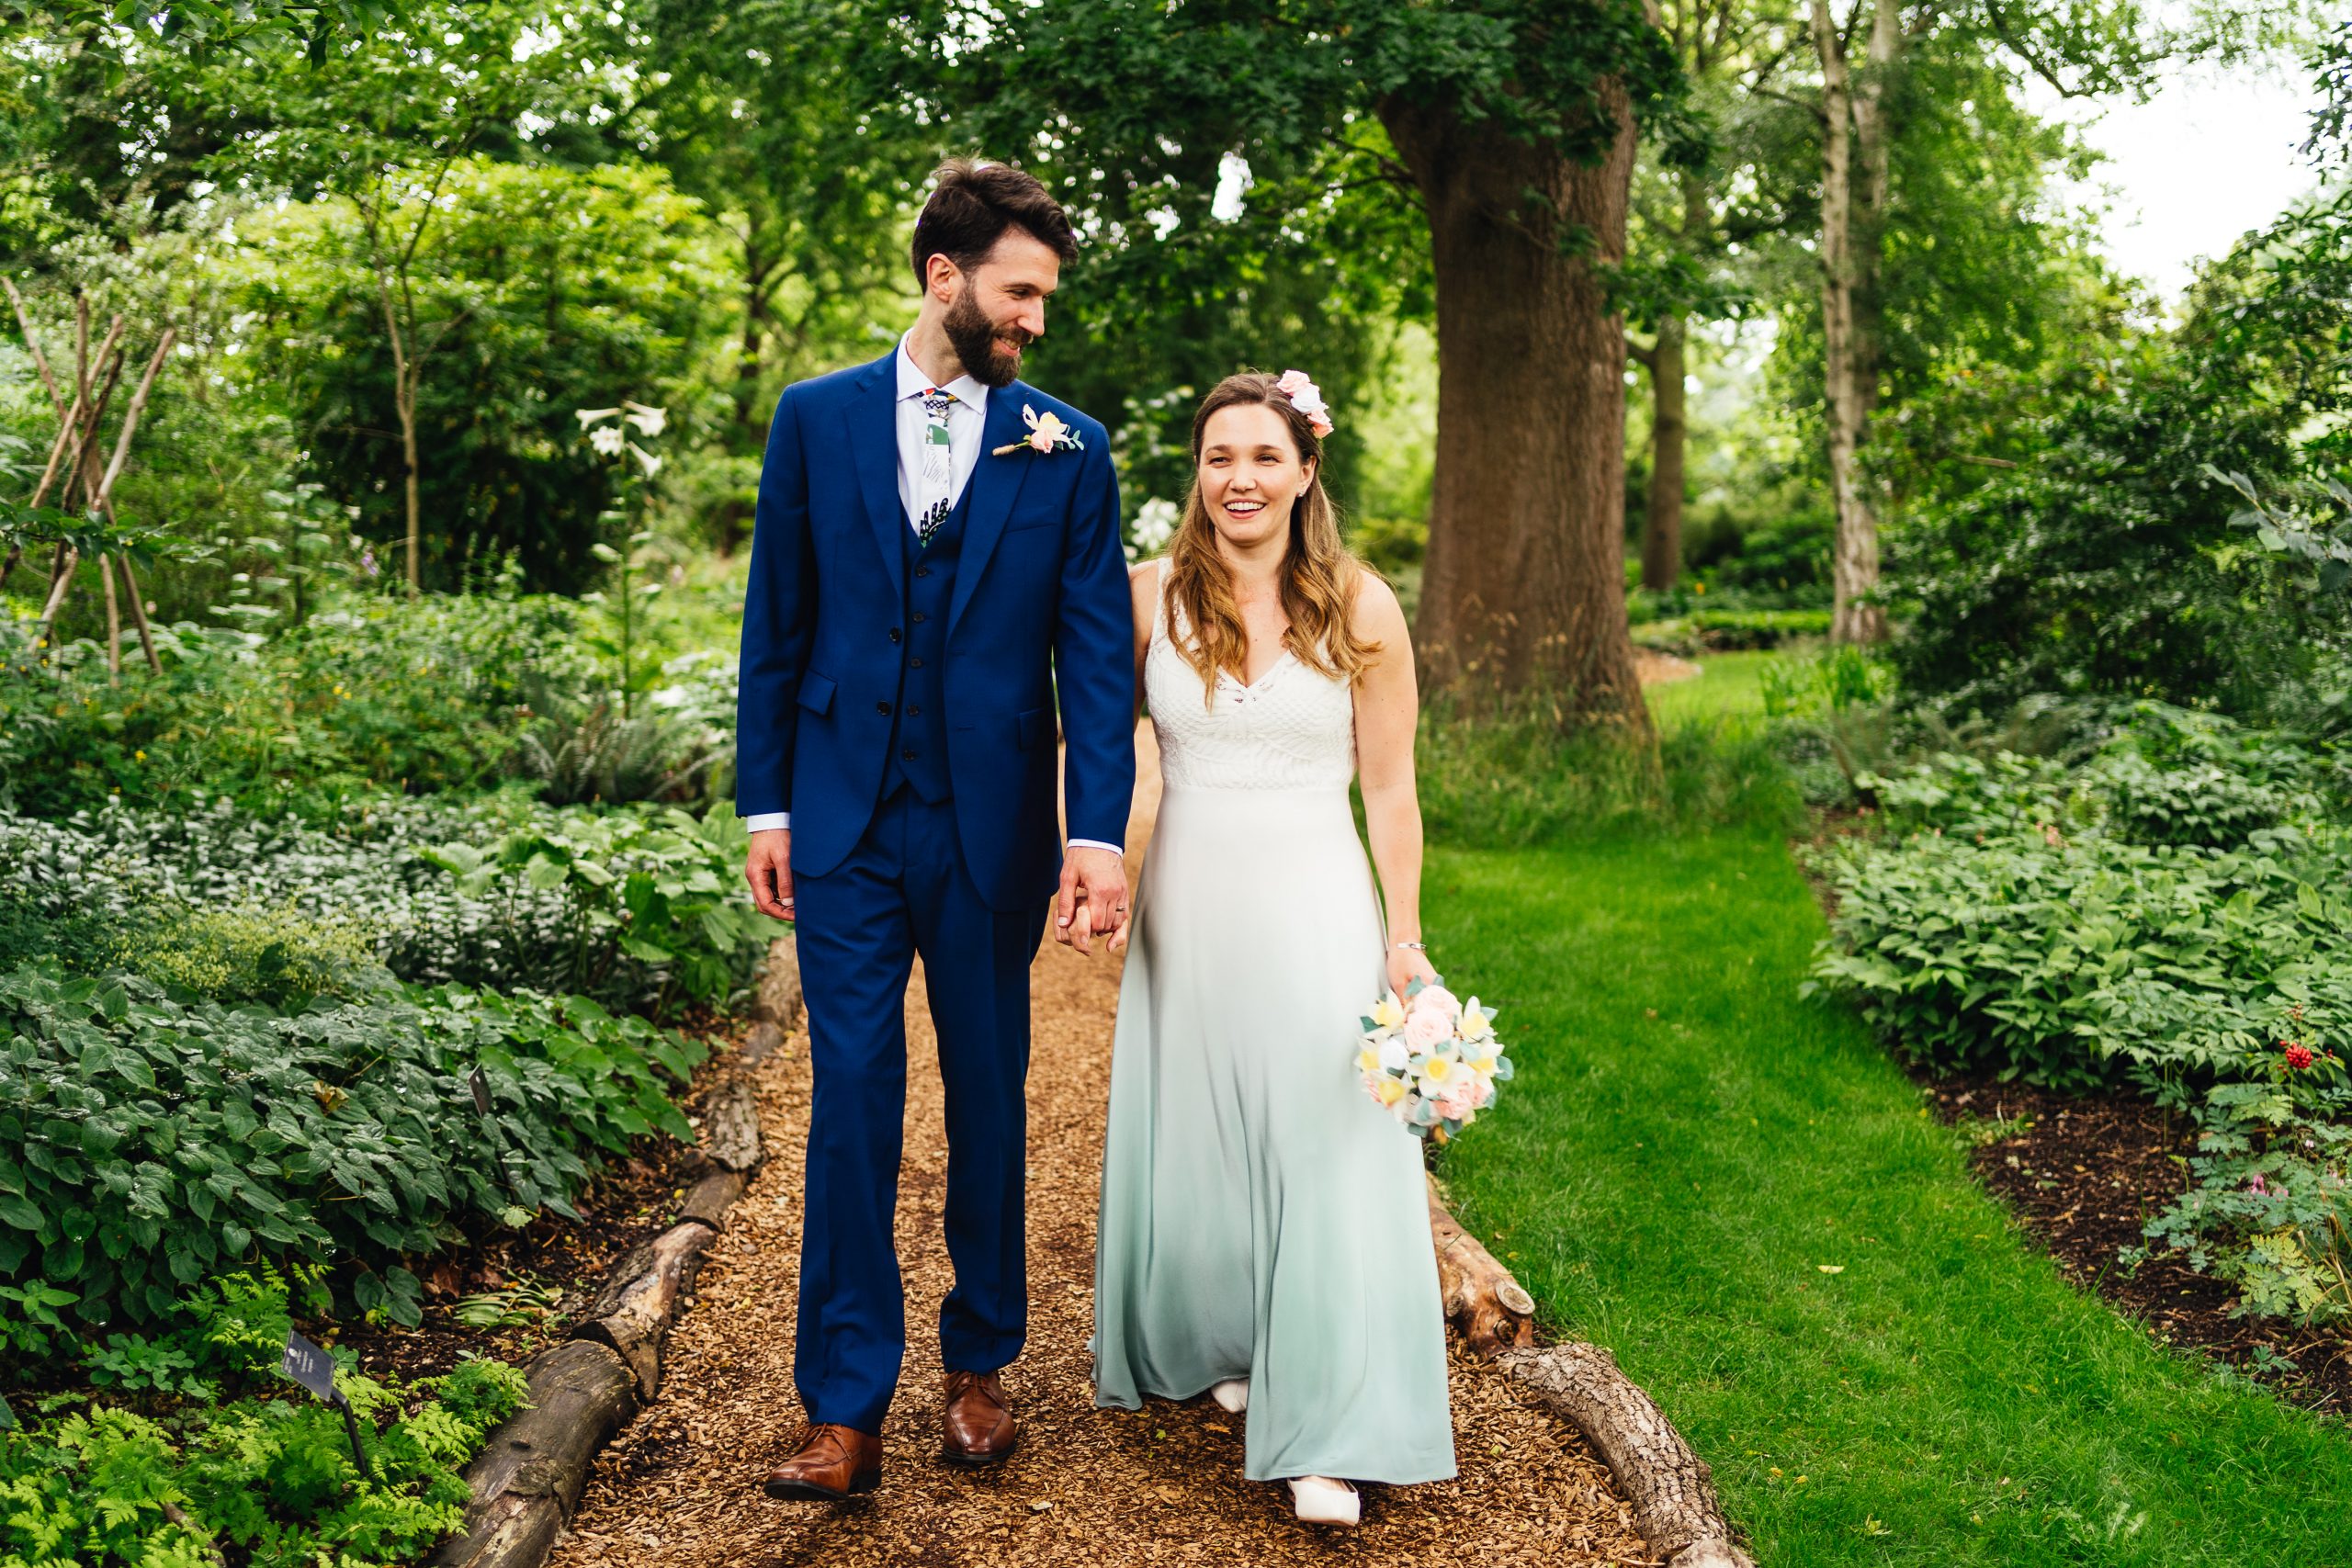 Best Wedding Venues in Surrey Kew Gardens